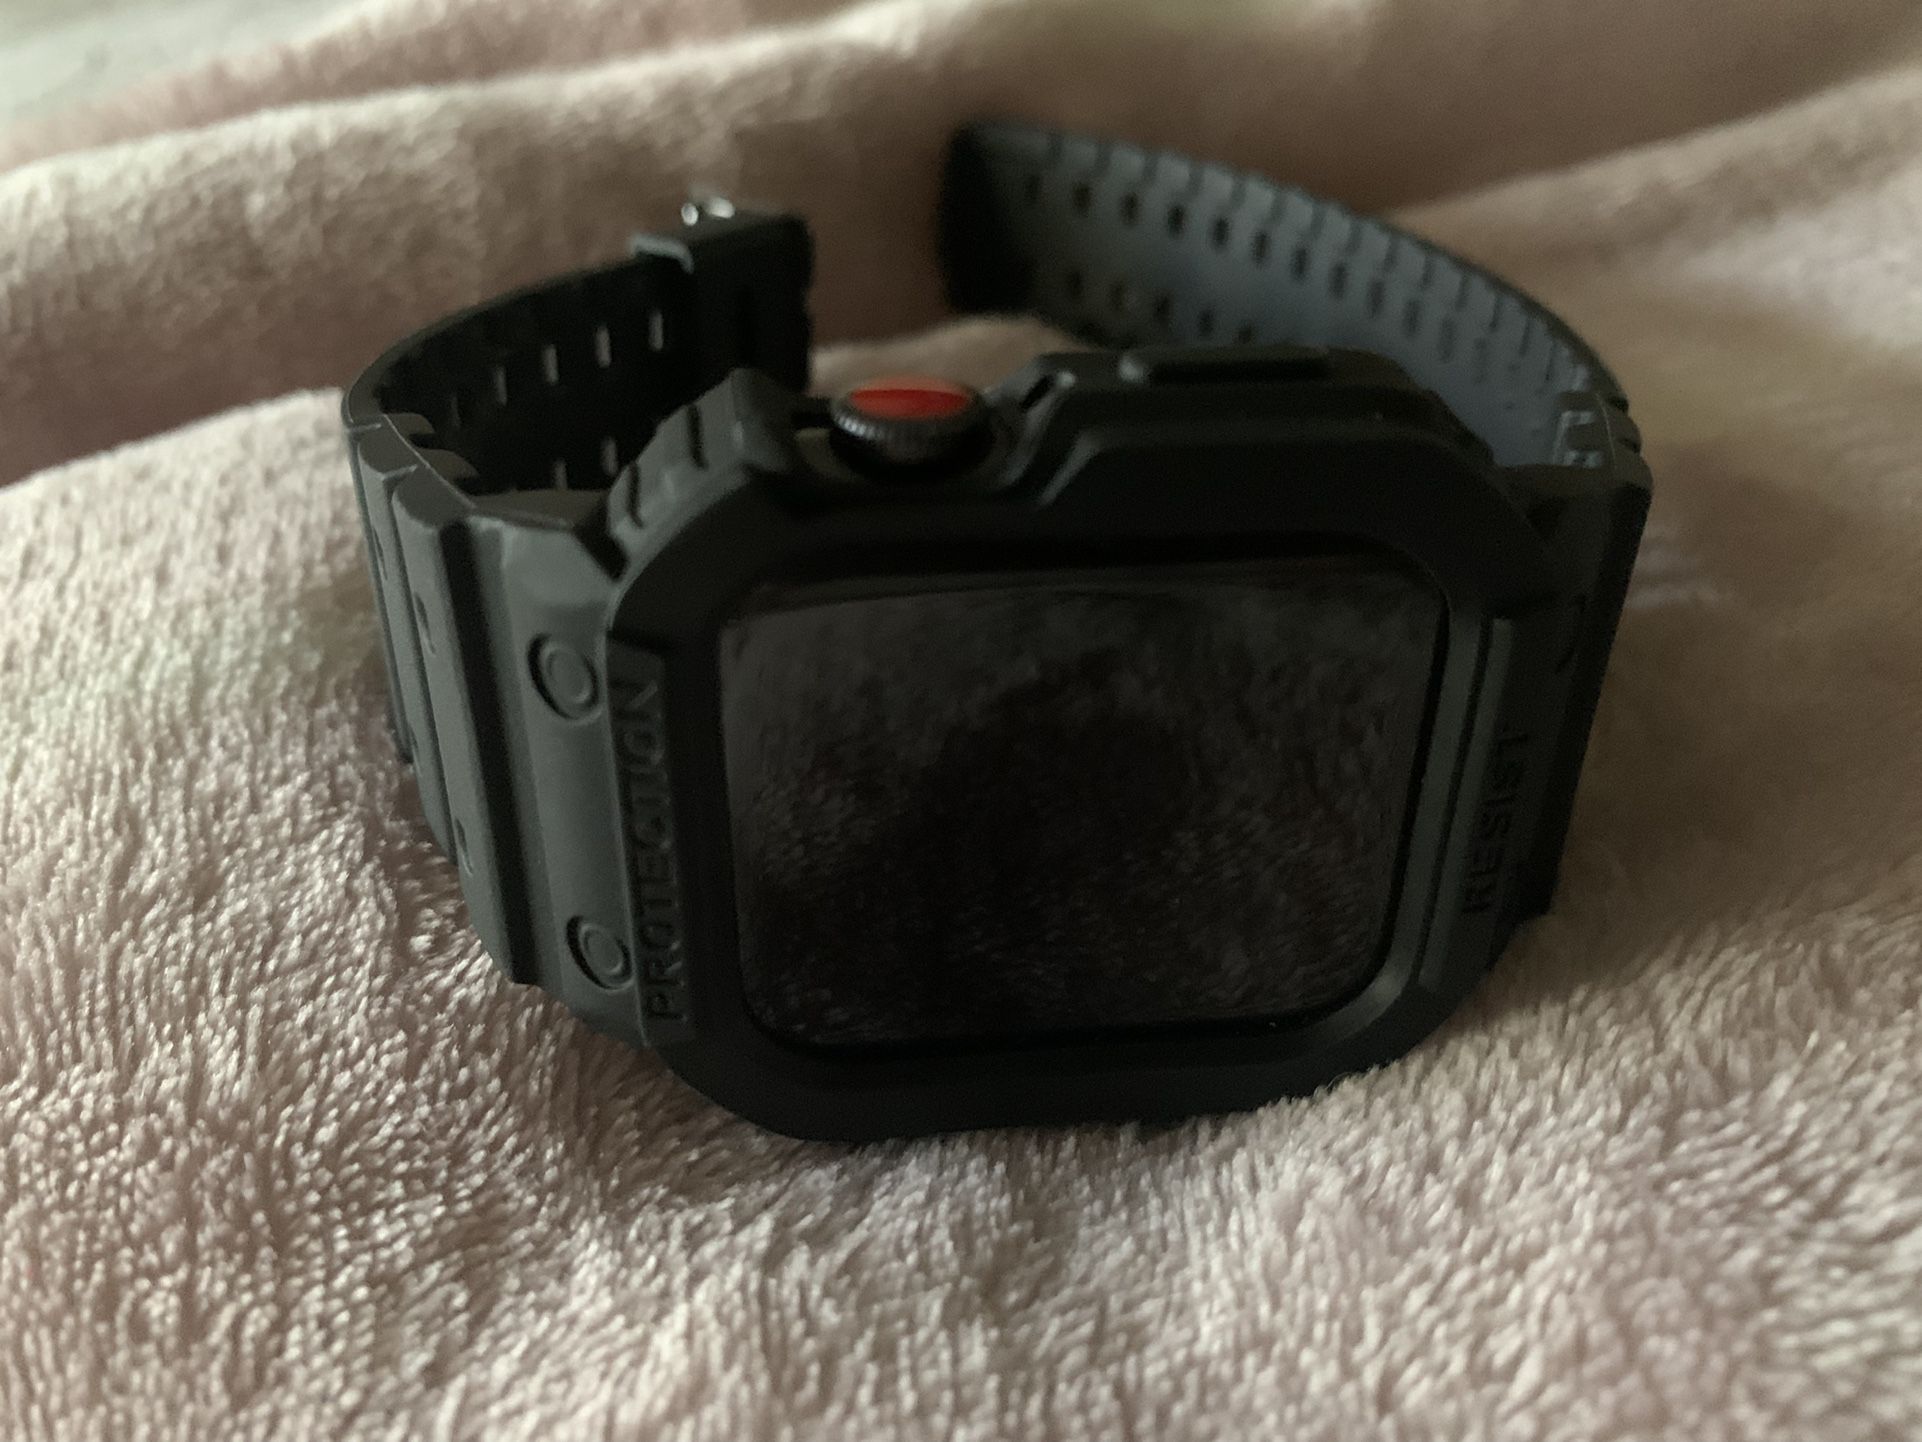 Apple Watch 42mm Series 3